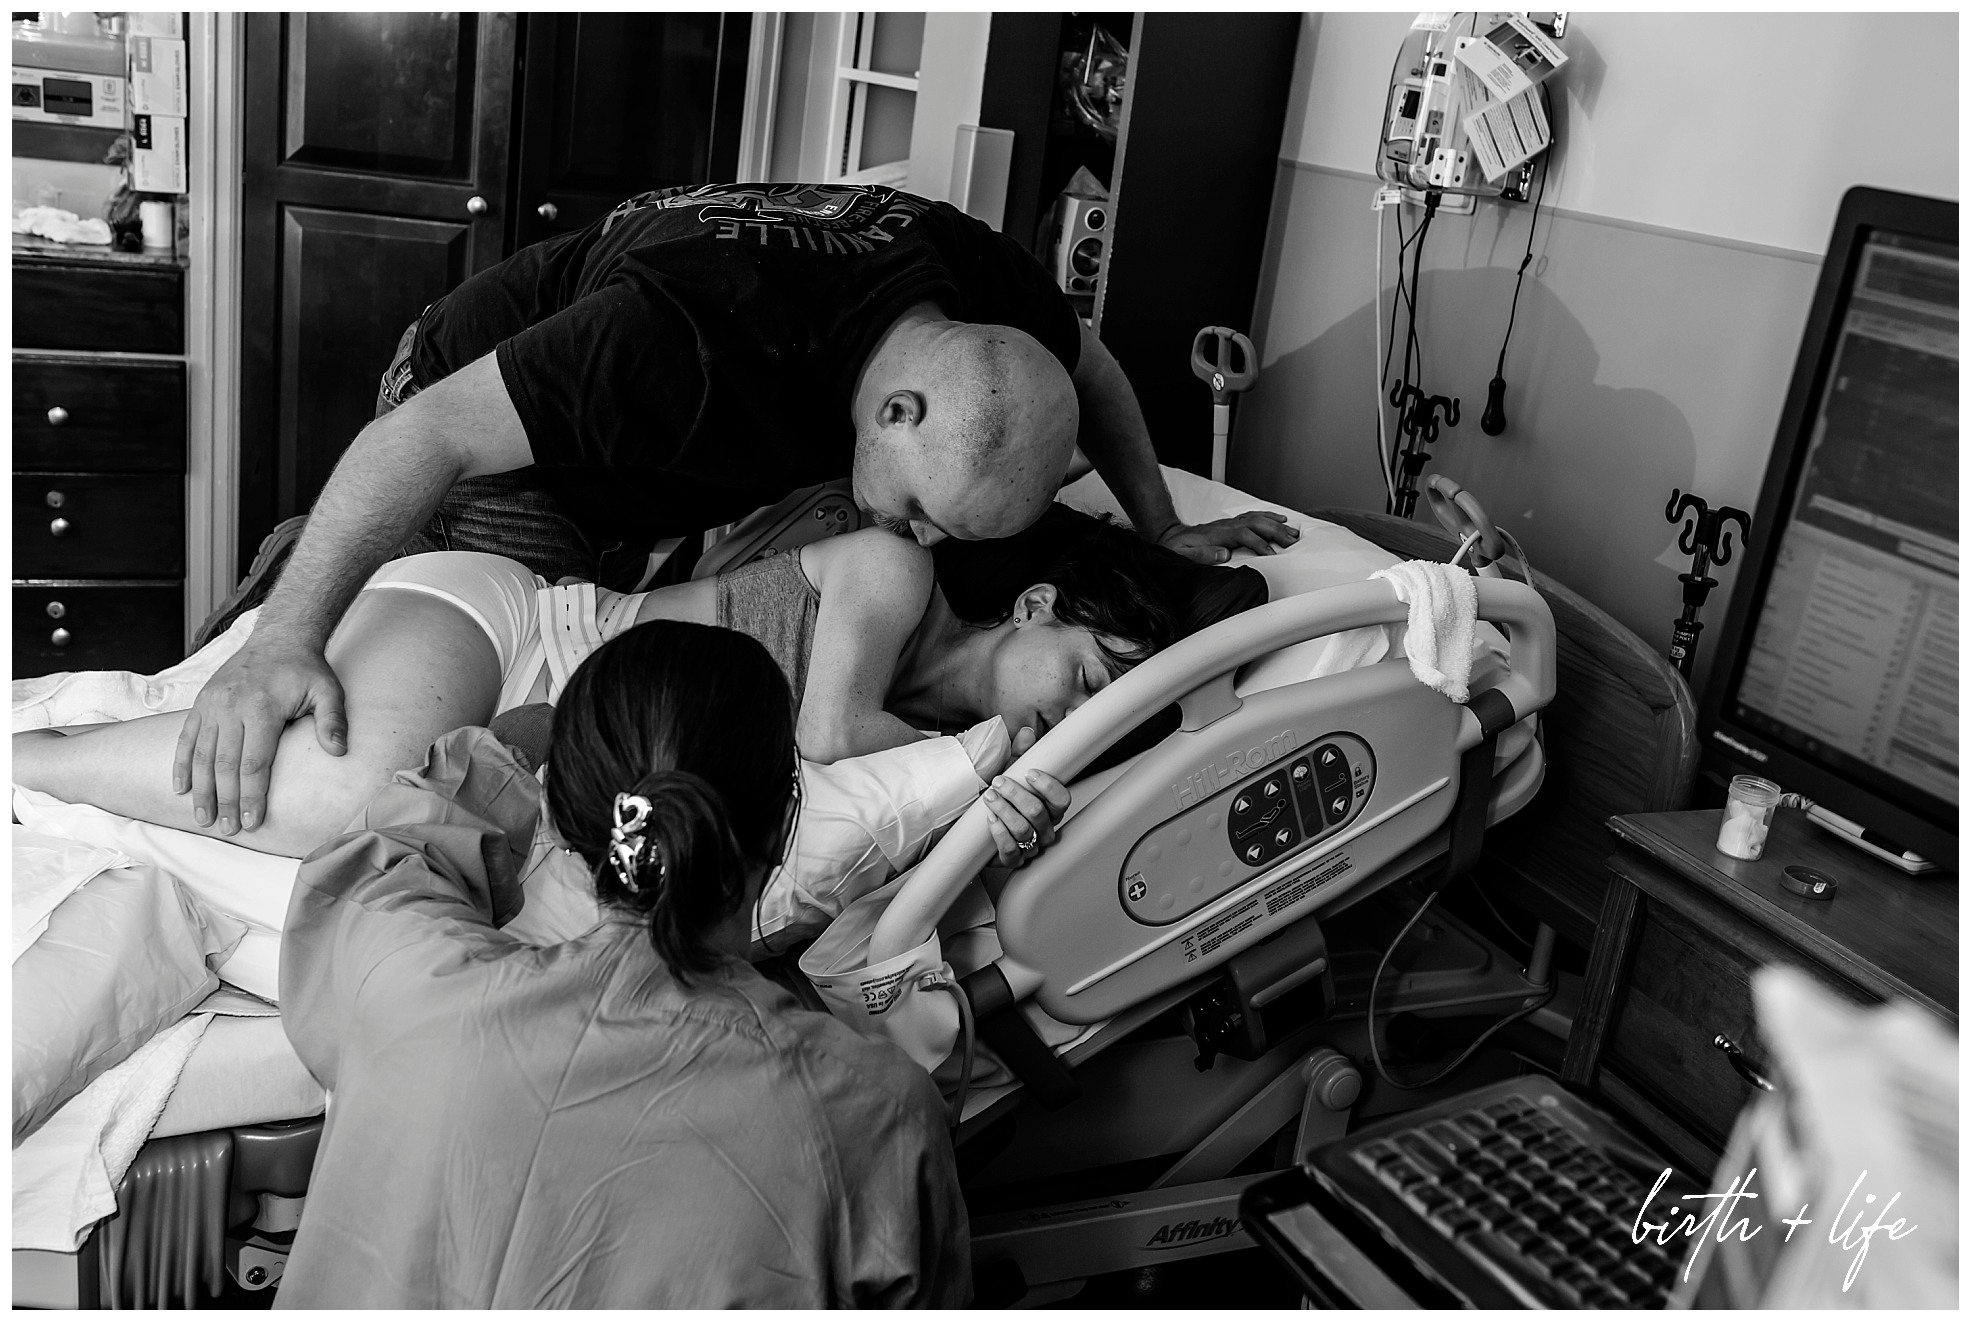 dfw-birth-and-life-photography-family-photojournalism-documentary-birth-storyacclaim-midwives-clark023.jpg